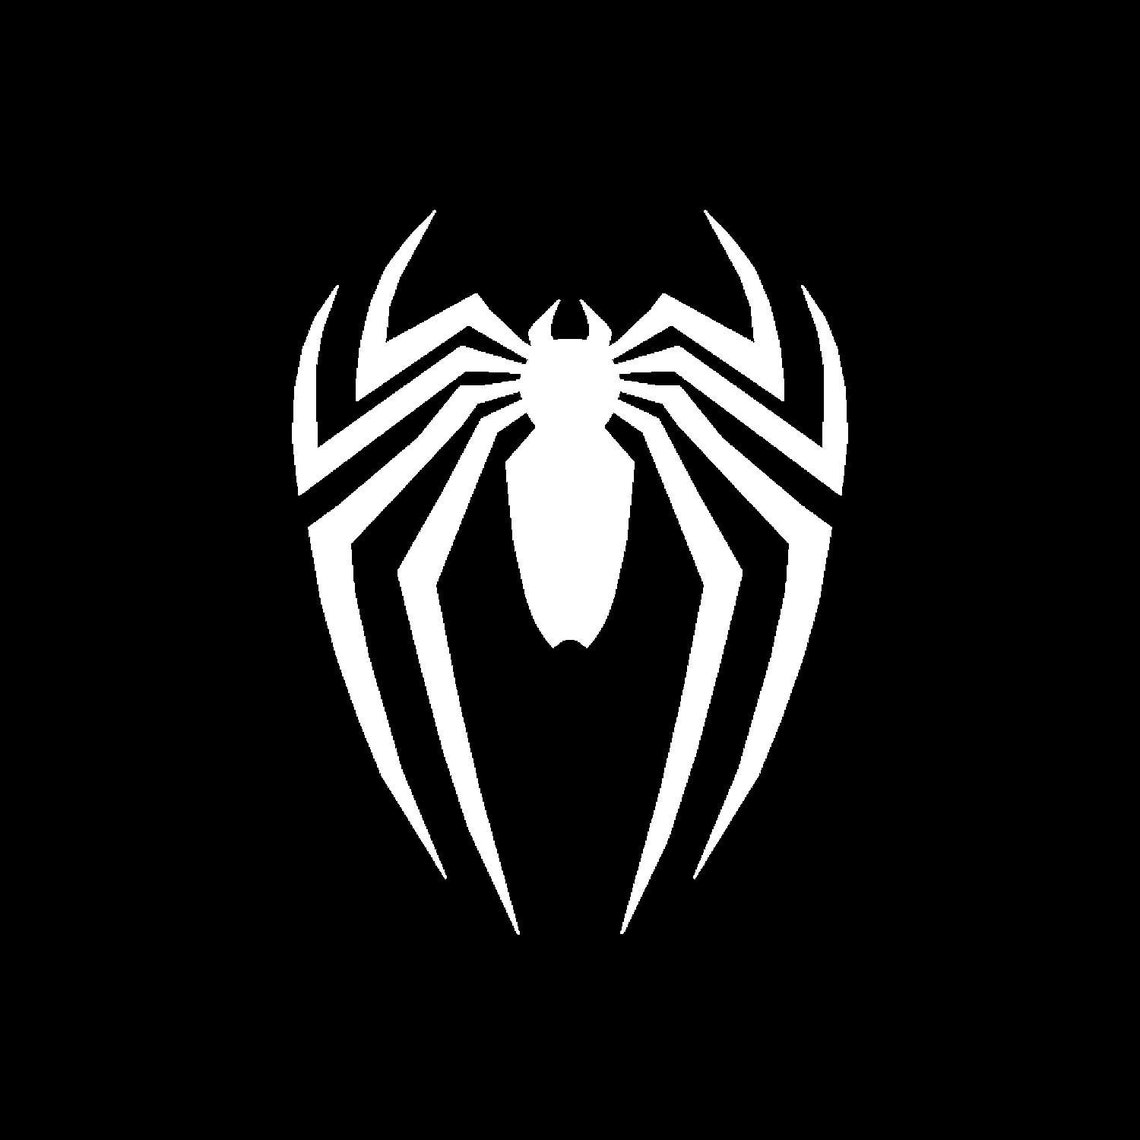 Spider-Man Emblem Decal | Etsy